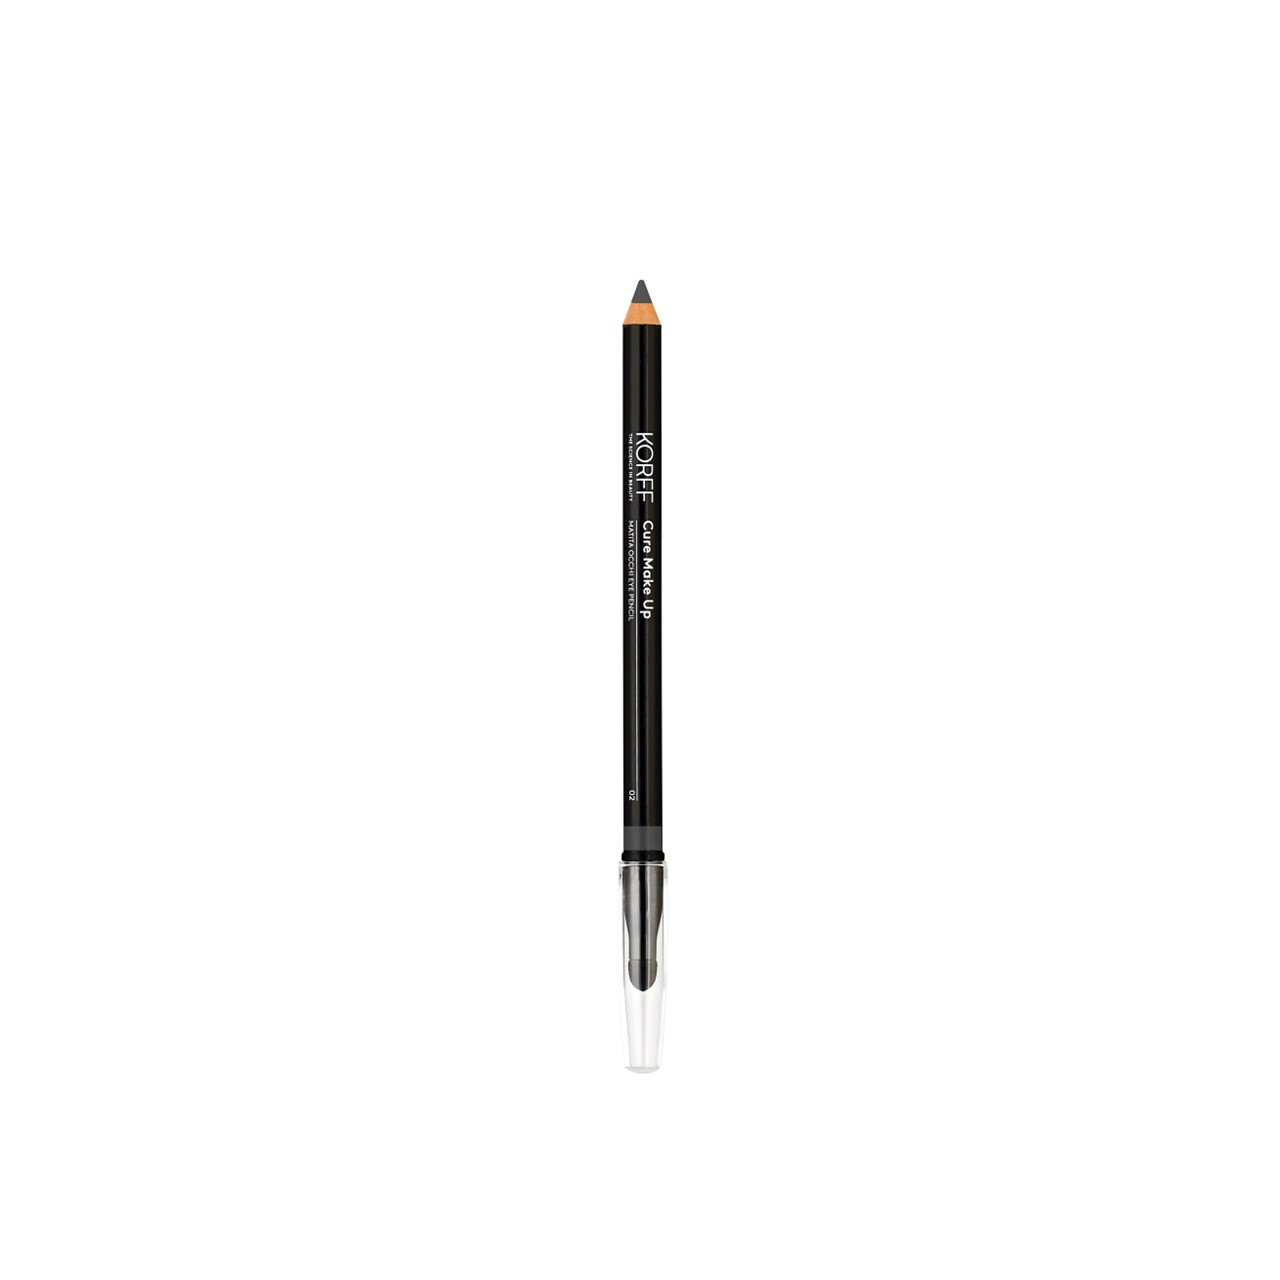 Korff Cure Make-Up Eye Pencil 02 1.1g (0.039 oz)